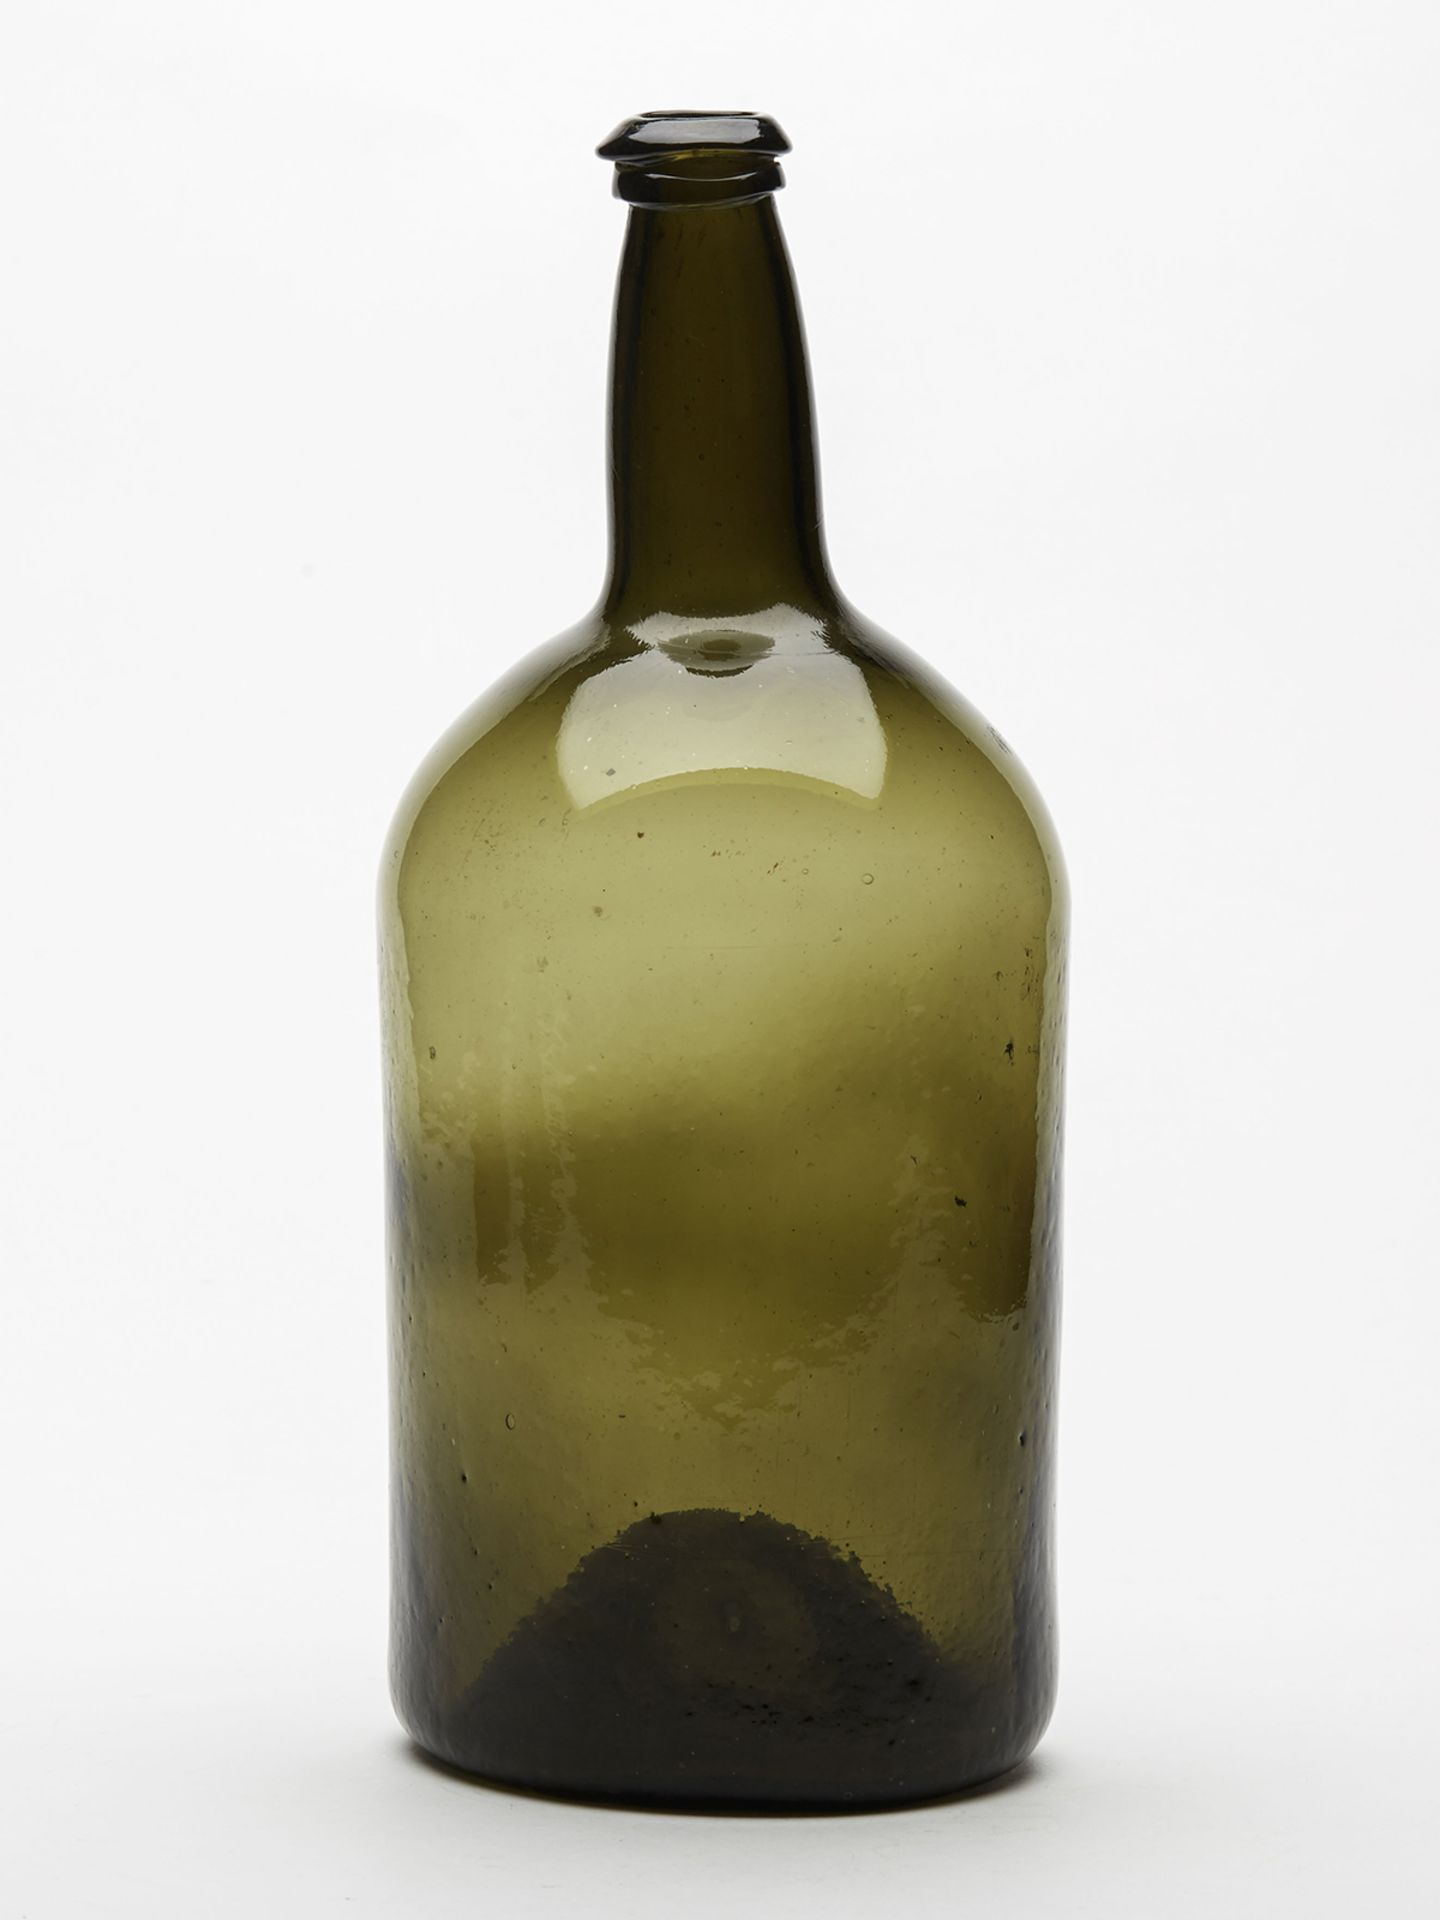 FINE LARGE ANTIQUE GREEN GLASS WINE BOTTLE c.1800 - Image 3 of 7